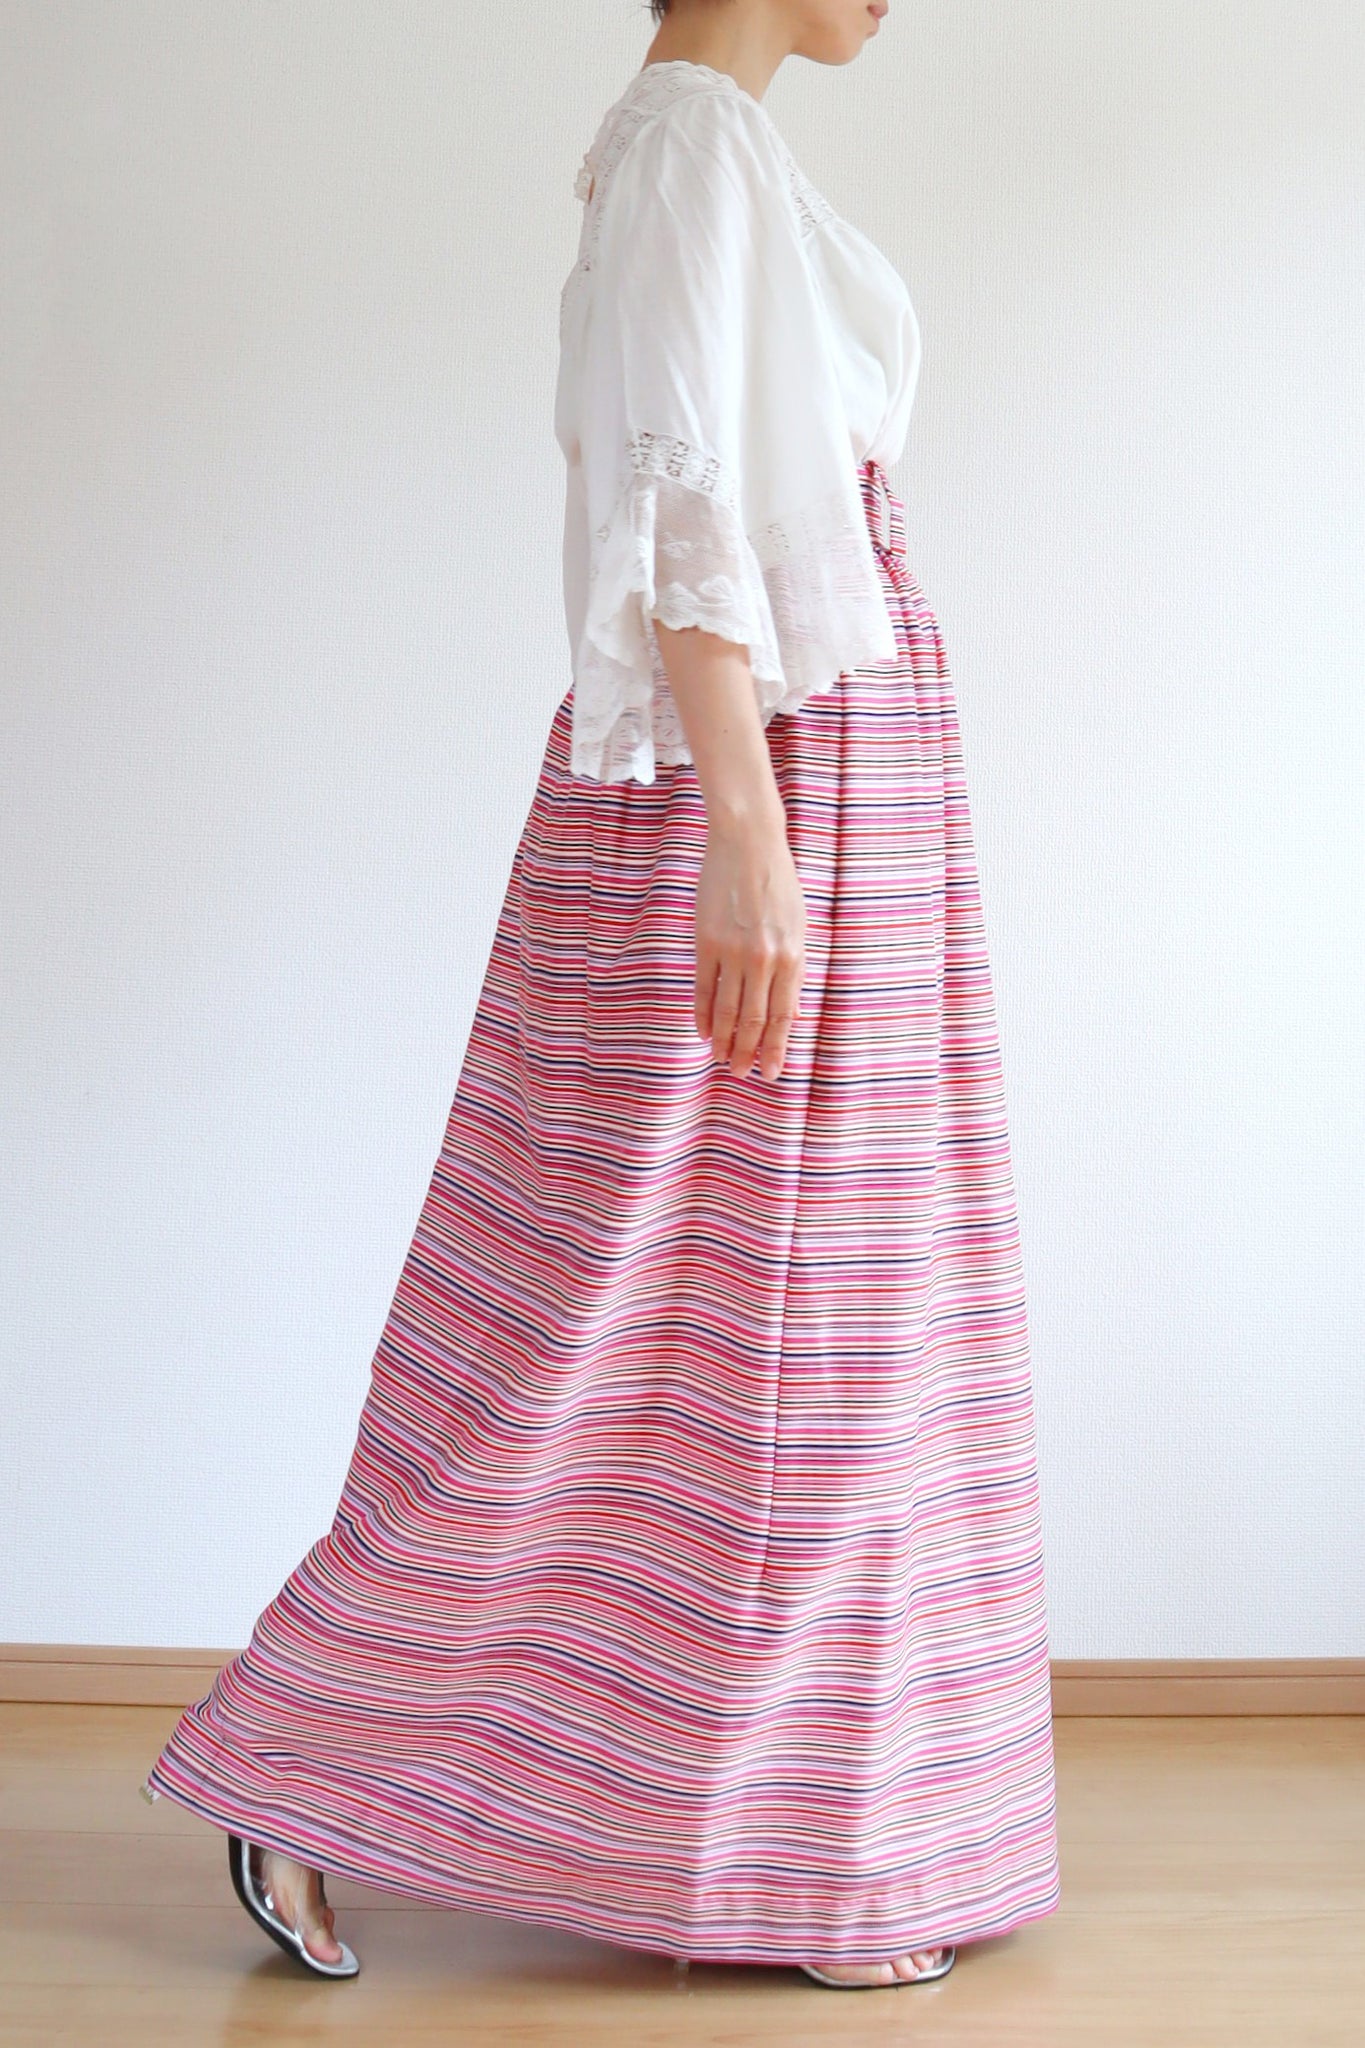 70s Vintage Anne Fogarty Striped Skirt